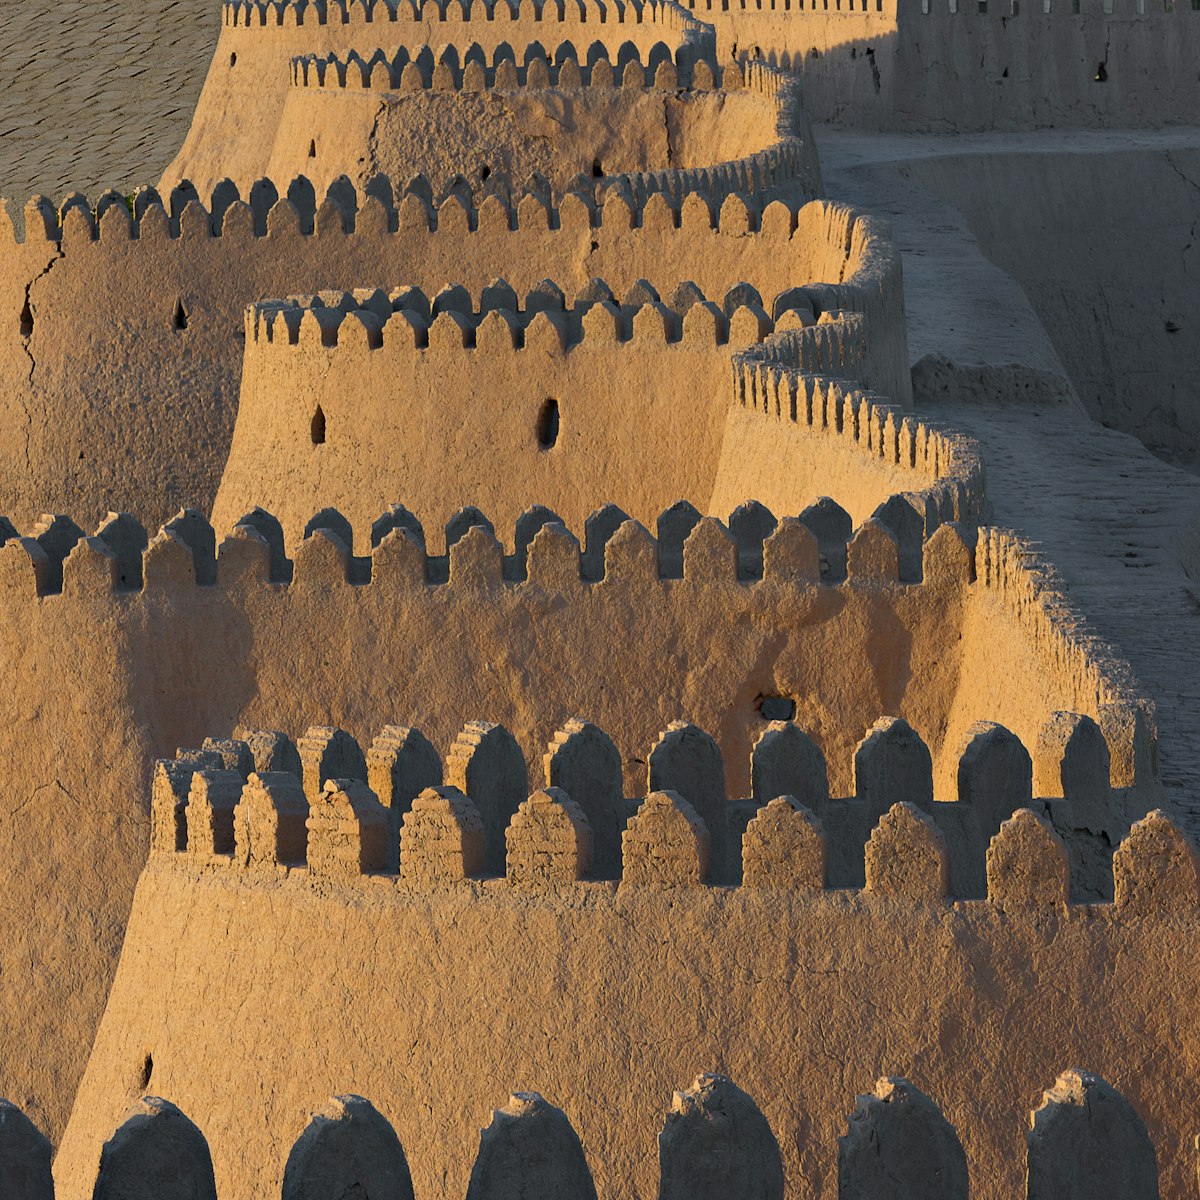 City walls of Khiva in Uzbekistan.